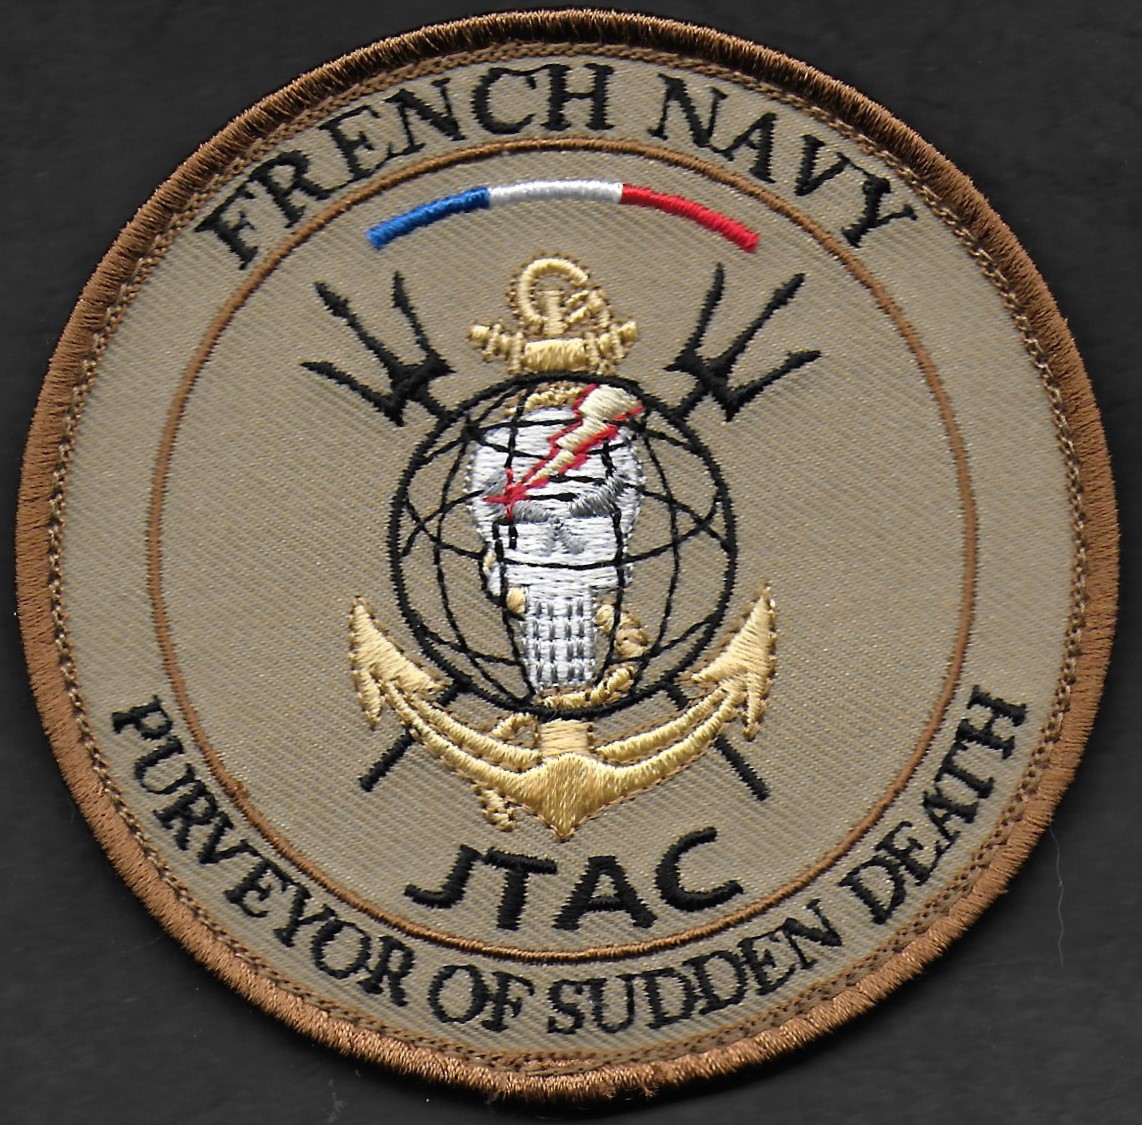 JTAC - French Navy - Purveyor of sudden death